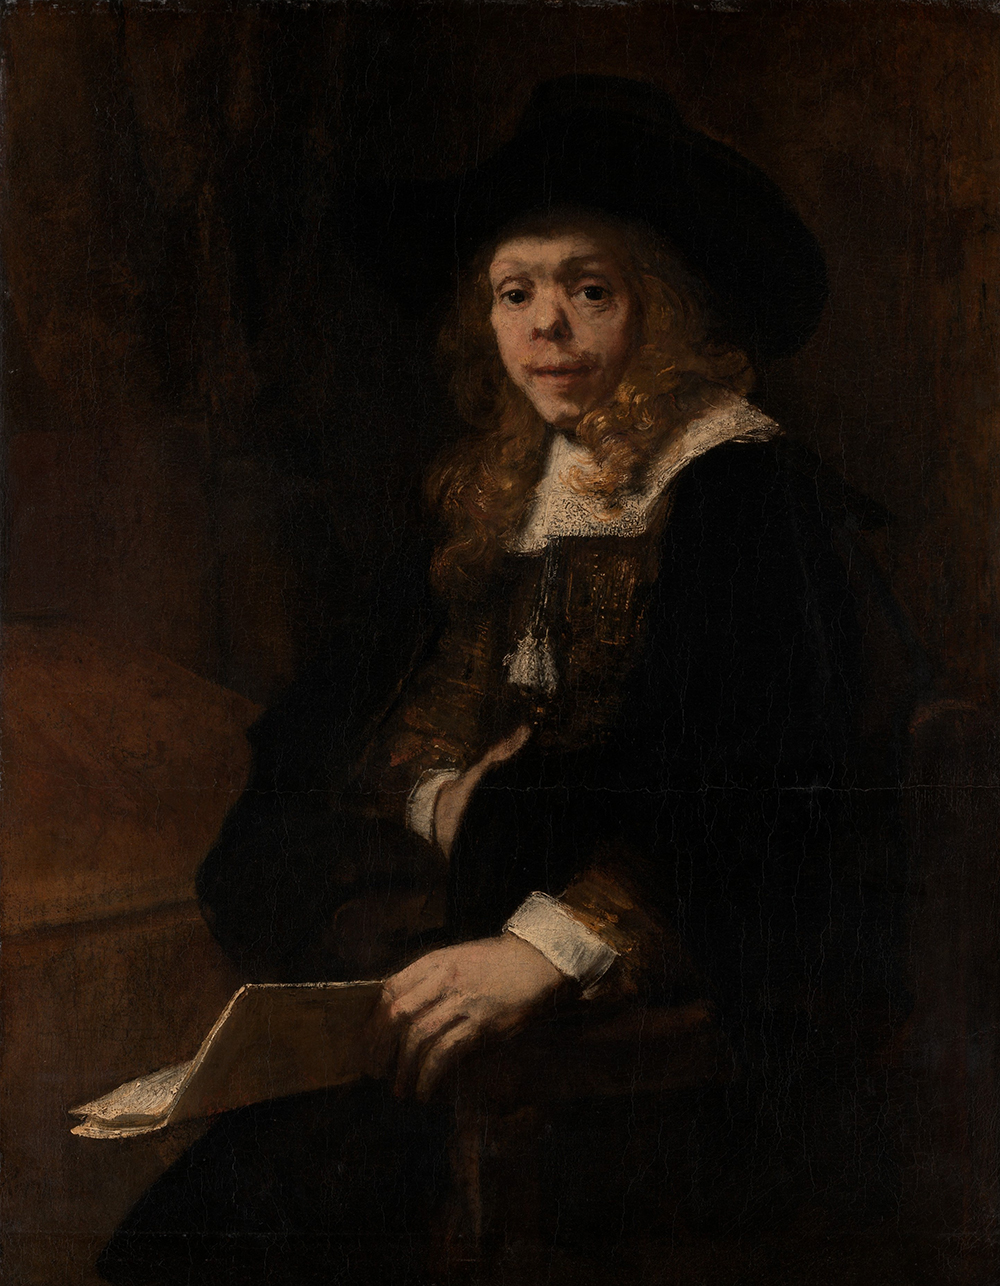 Portrait of Gerard de Lairesse, by Rembrandt van Rijn, c. 1665. 